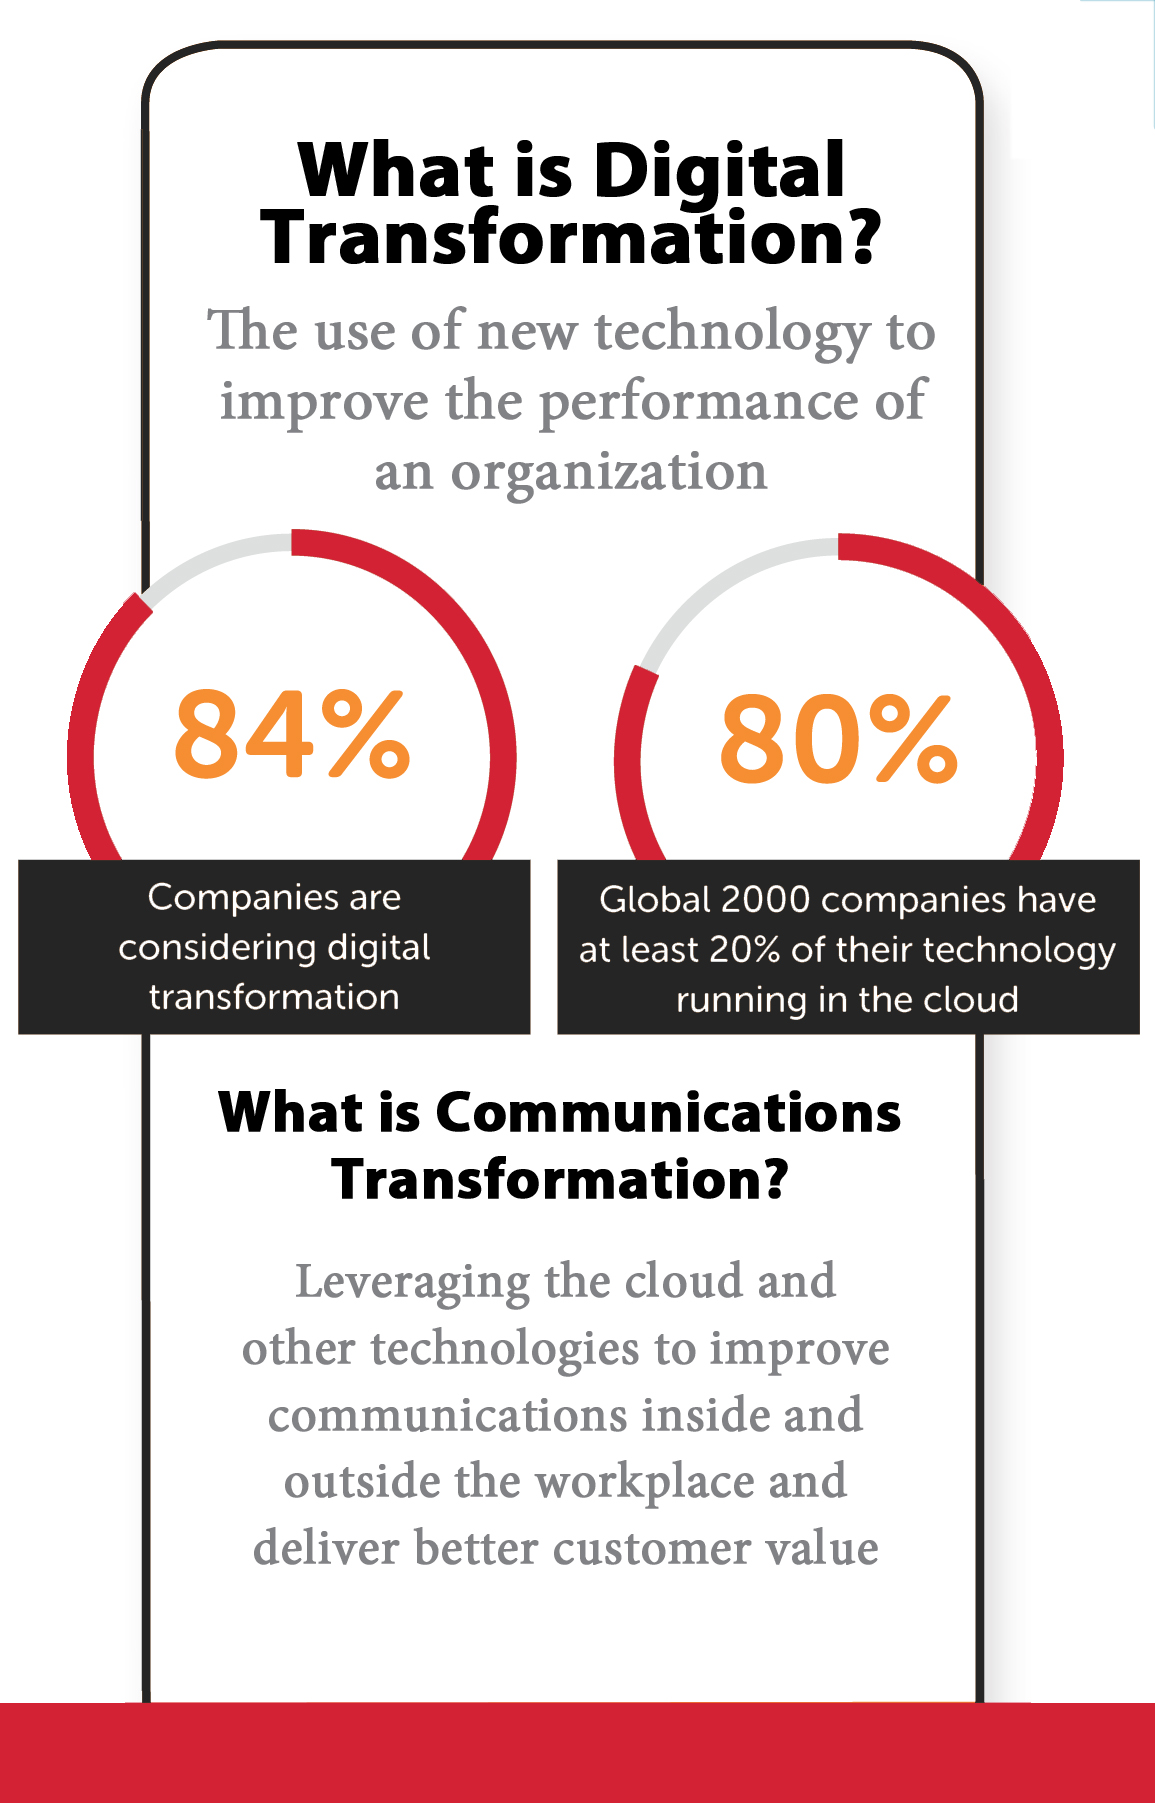 An infographic describing the benefits of Digital Transformation